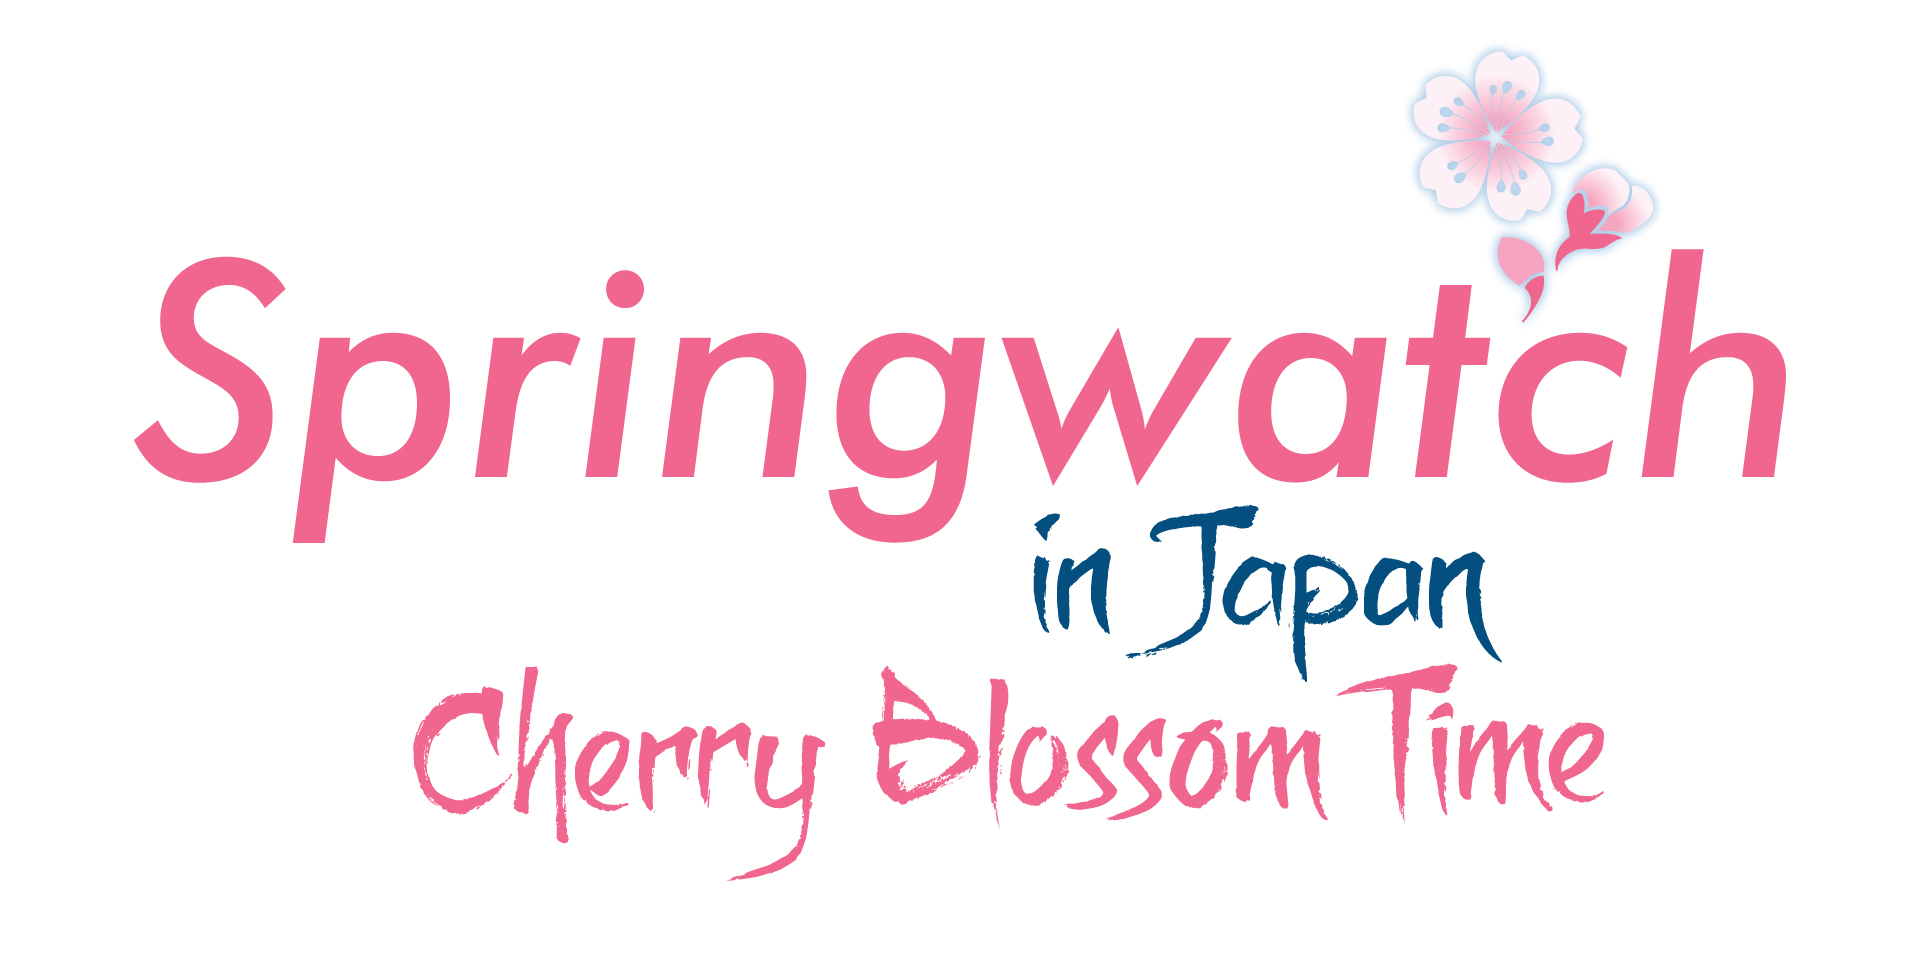 BBC Springwatch in Japan Cherry Blossom Time brand identity